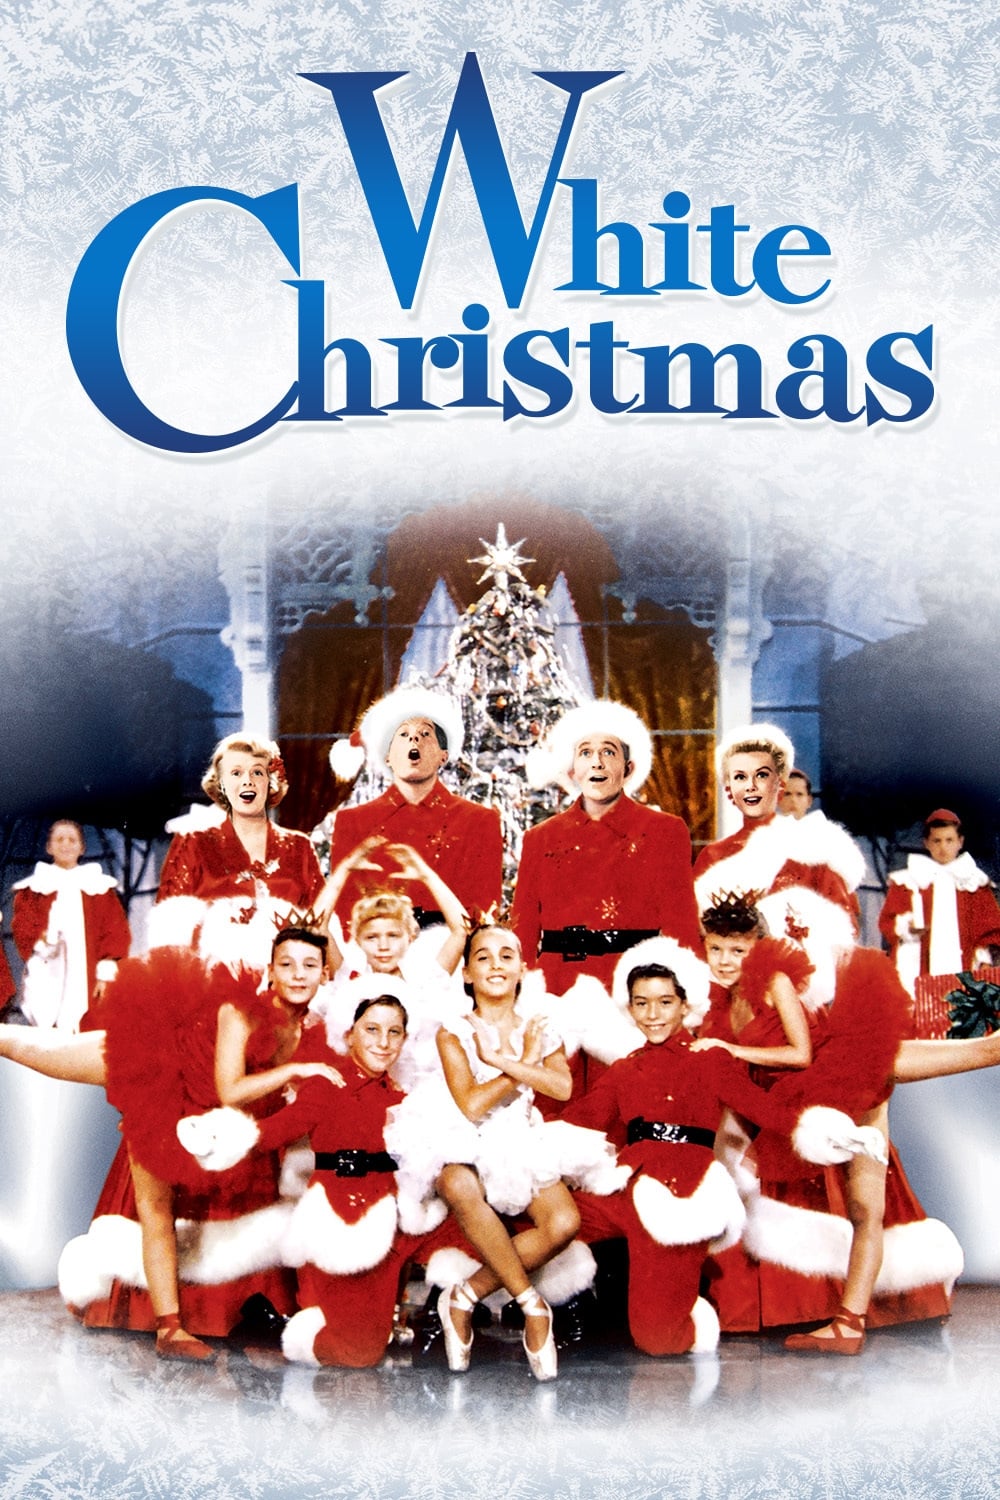 White Christmas 1954 HD vudu or Itunes via Paramount redeem